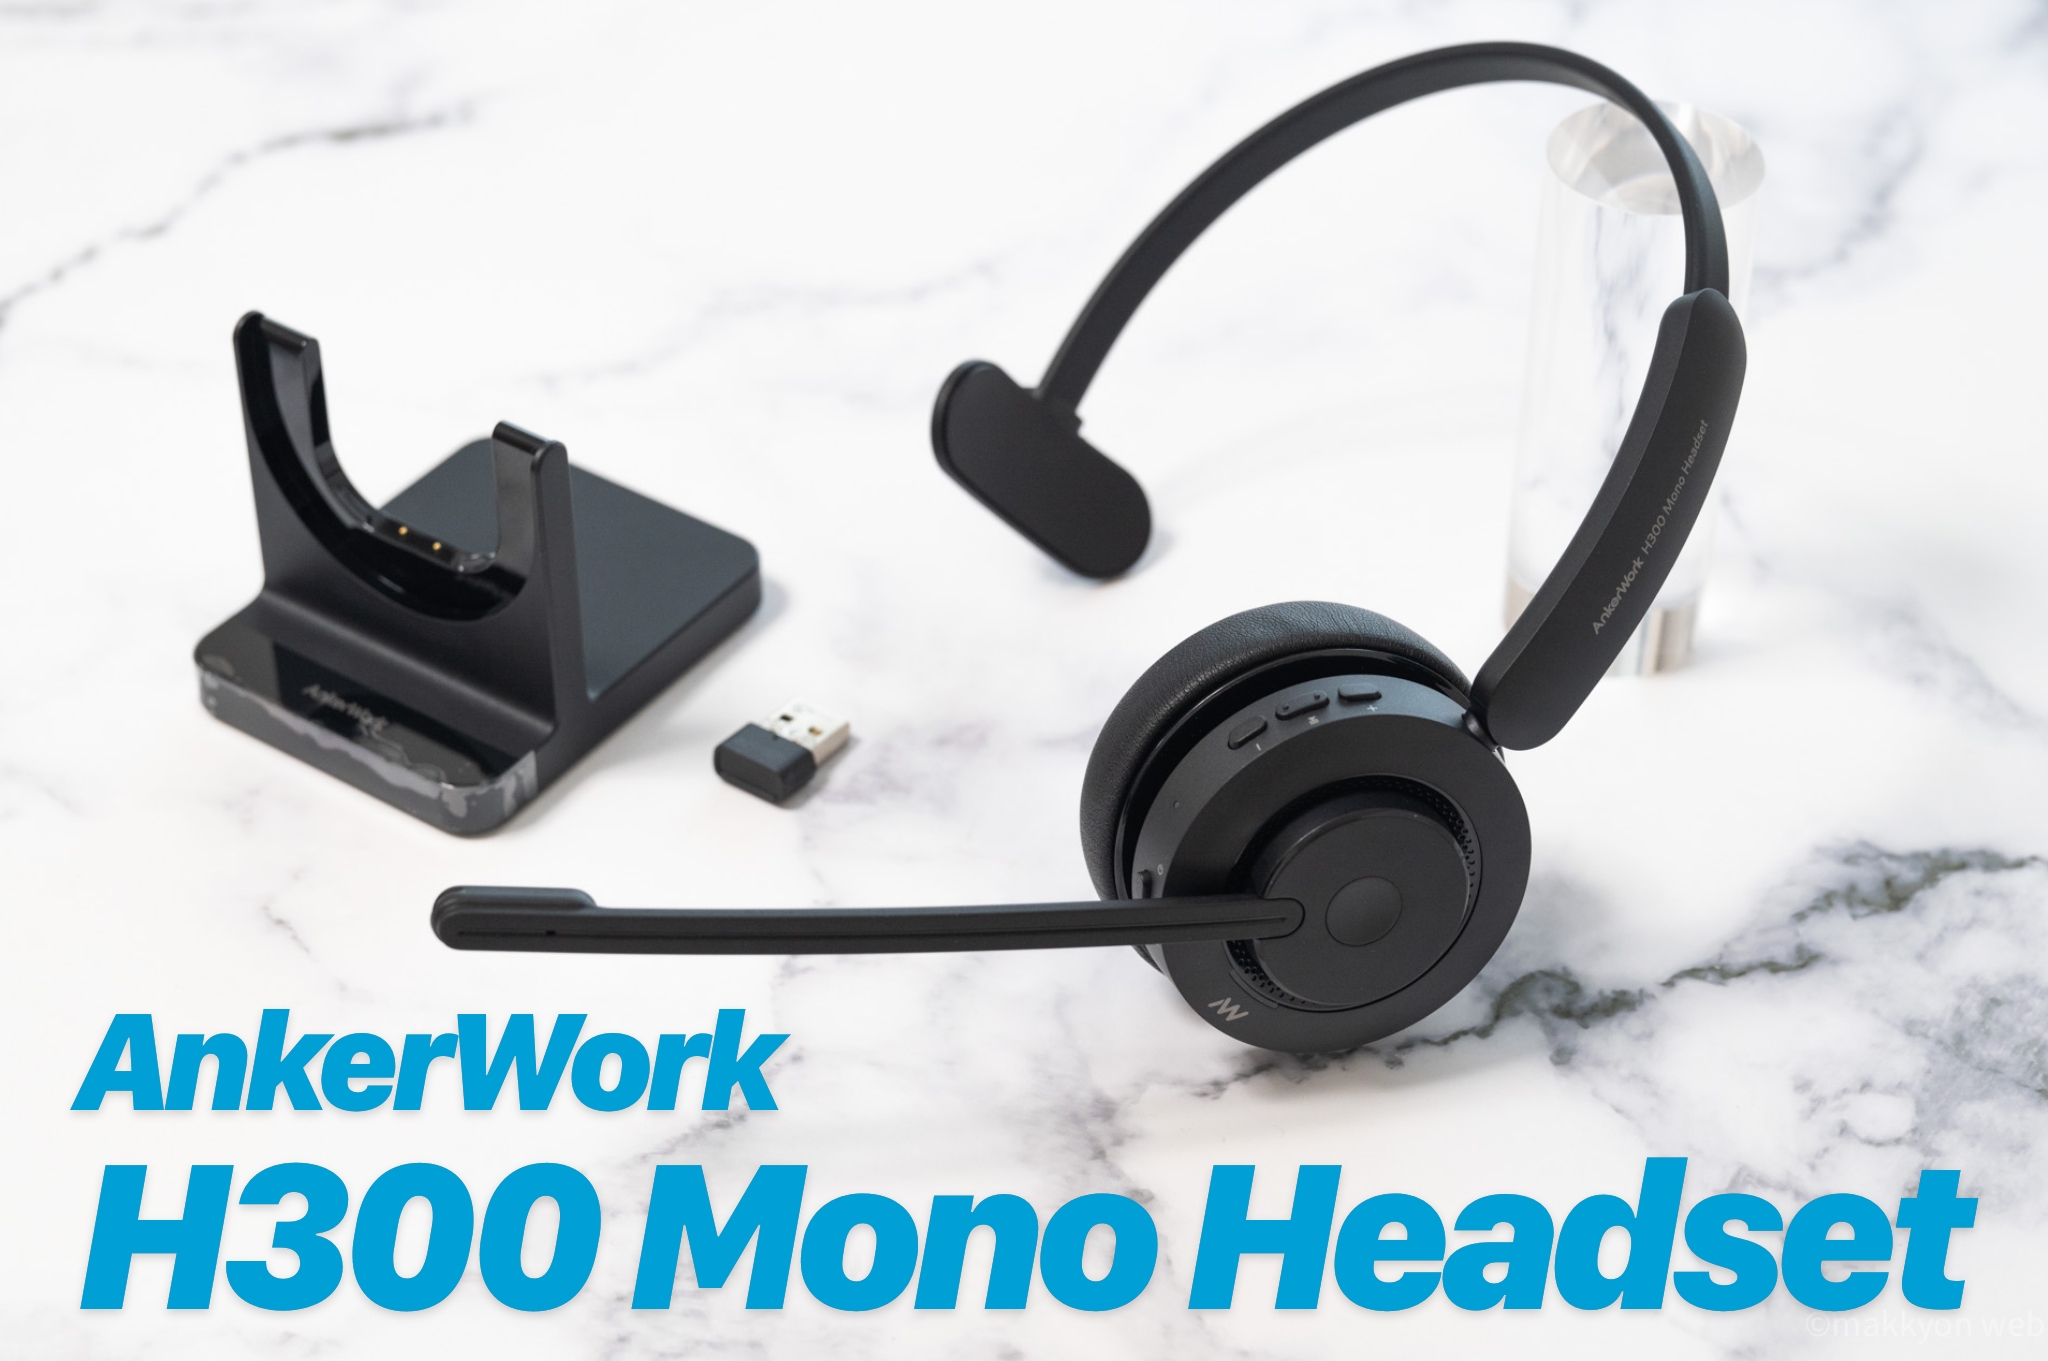 ankerwork H300 Mono Headset